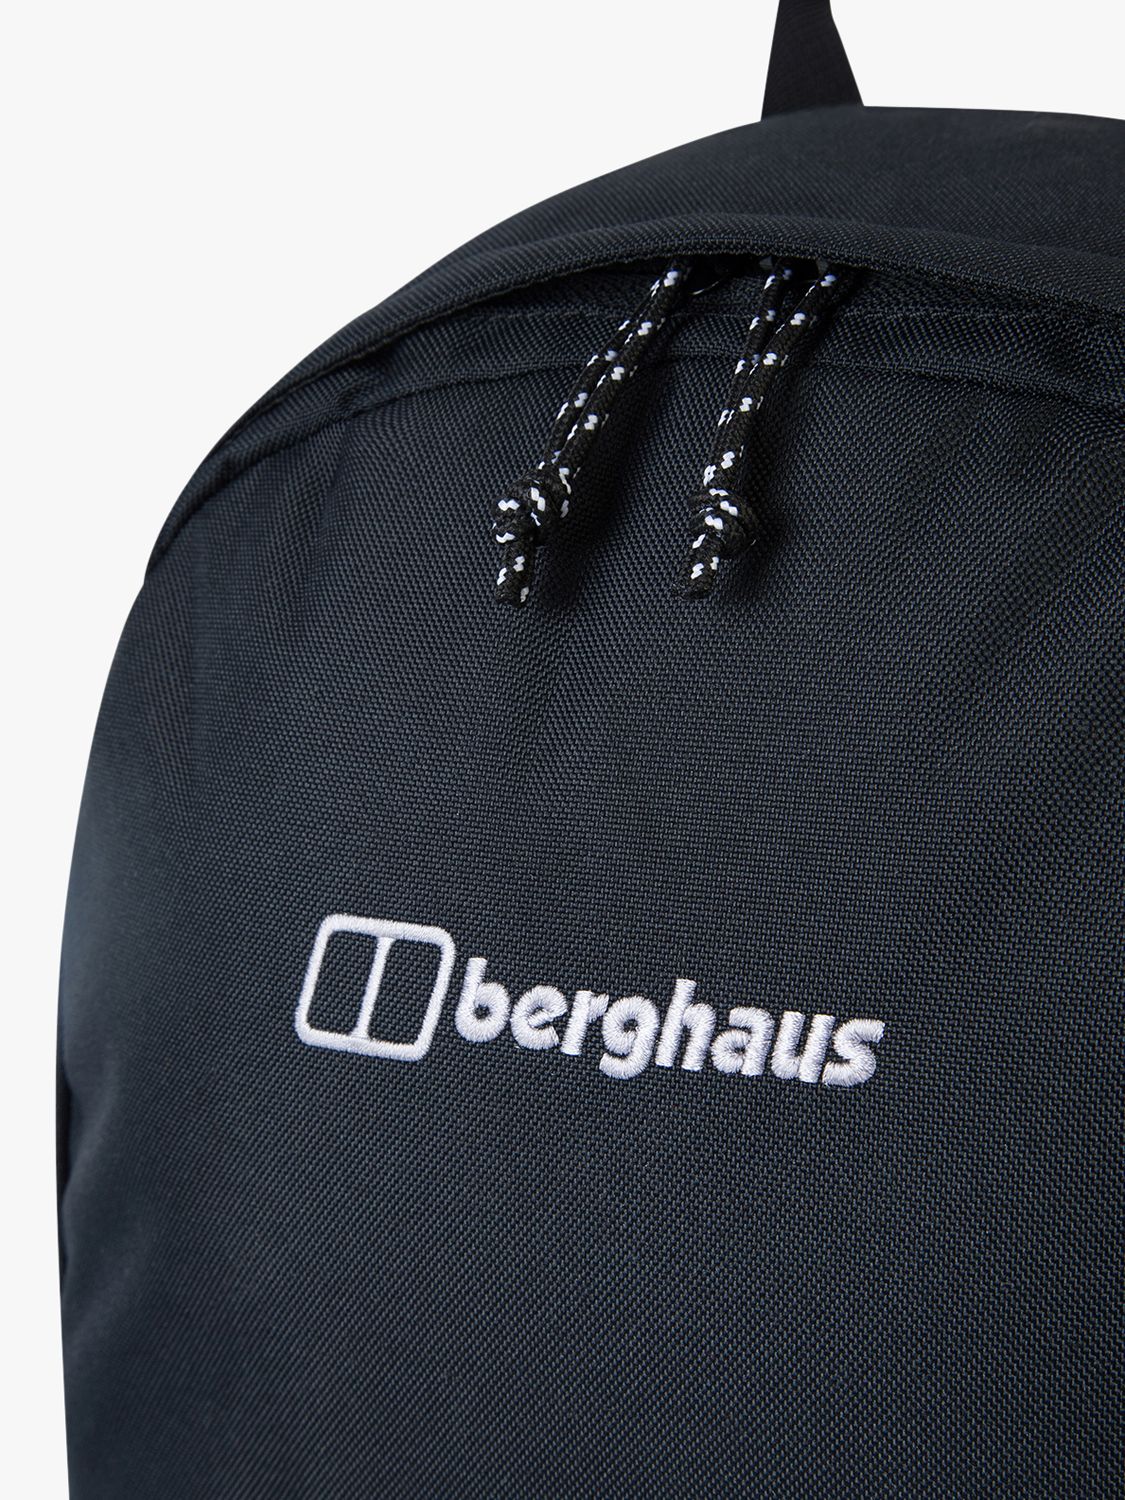 Buy Berghaus Versatile Rucksack Backpack, Black/Carbon Online at johnlewis.com